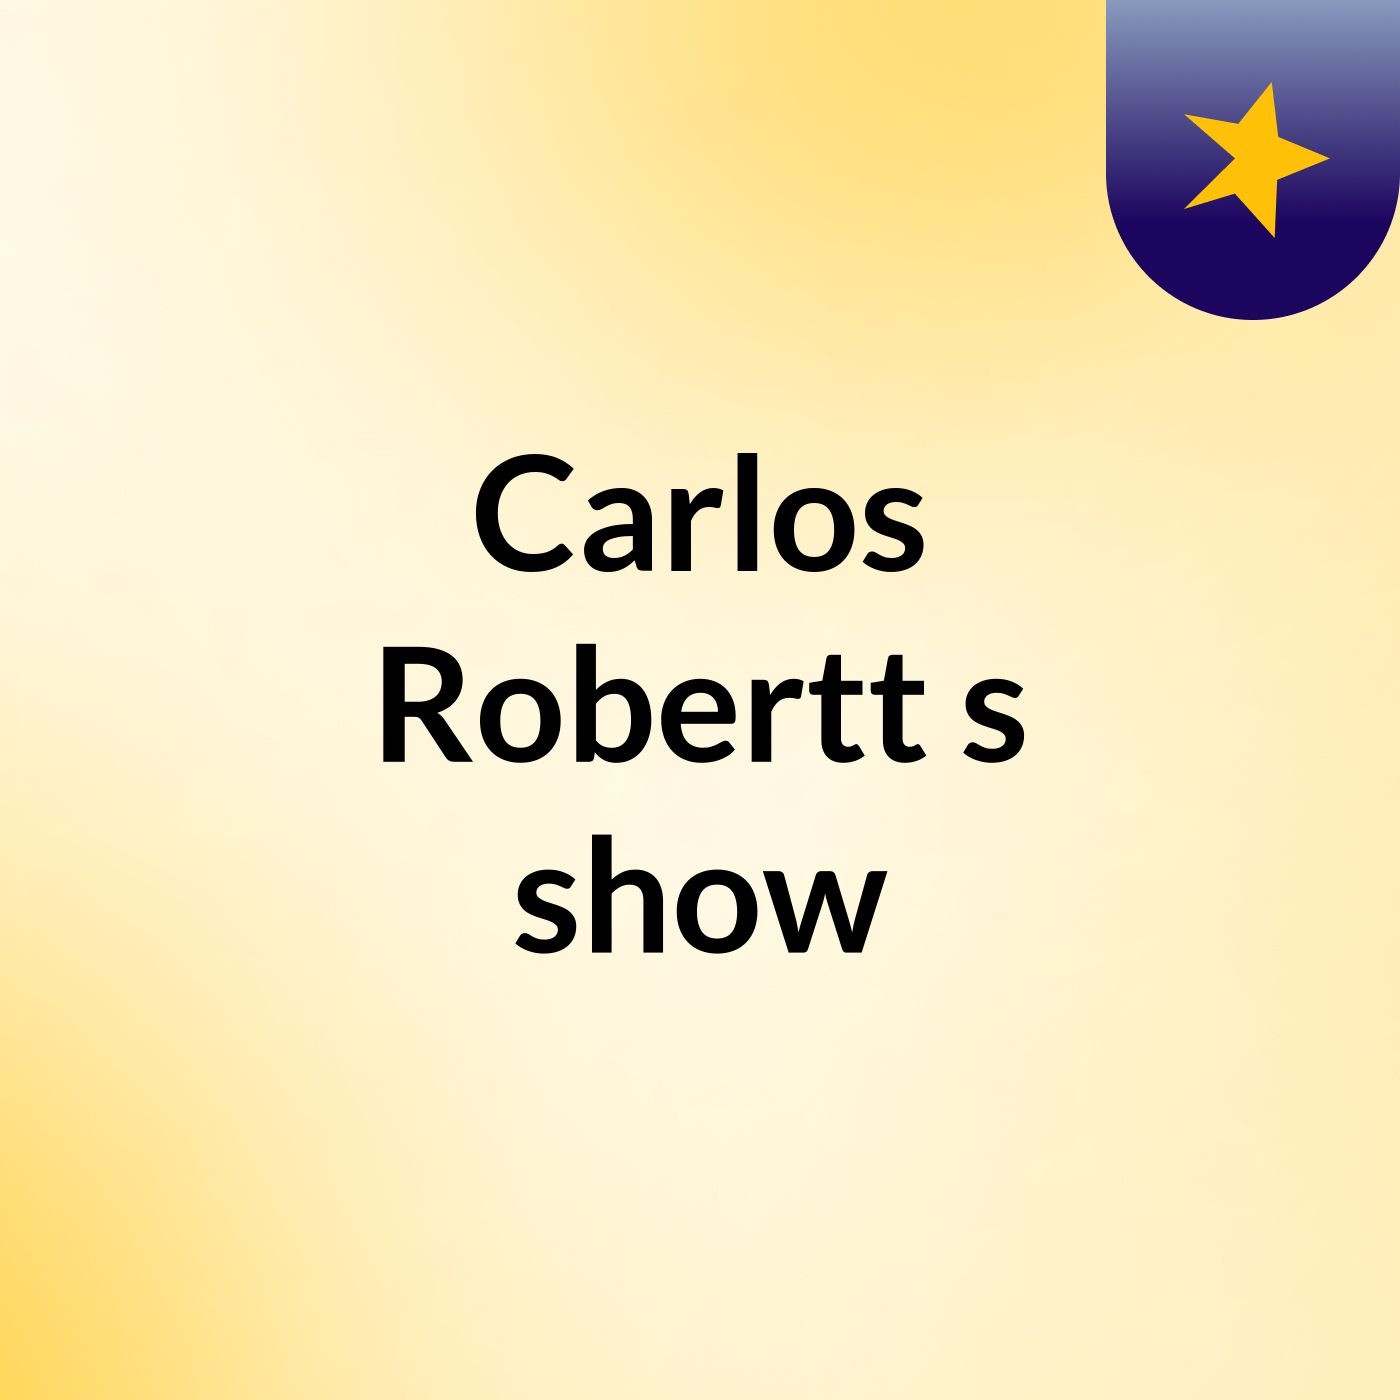 Carlos Robertt's show